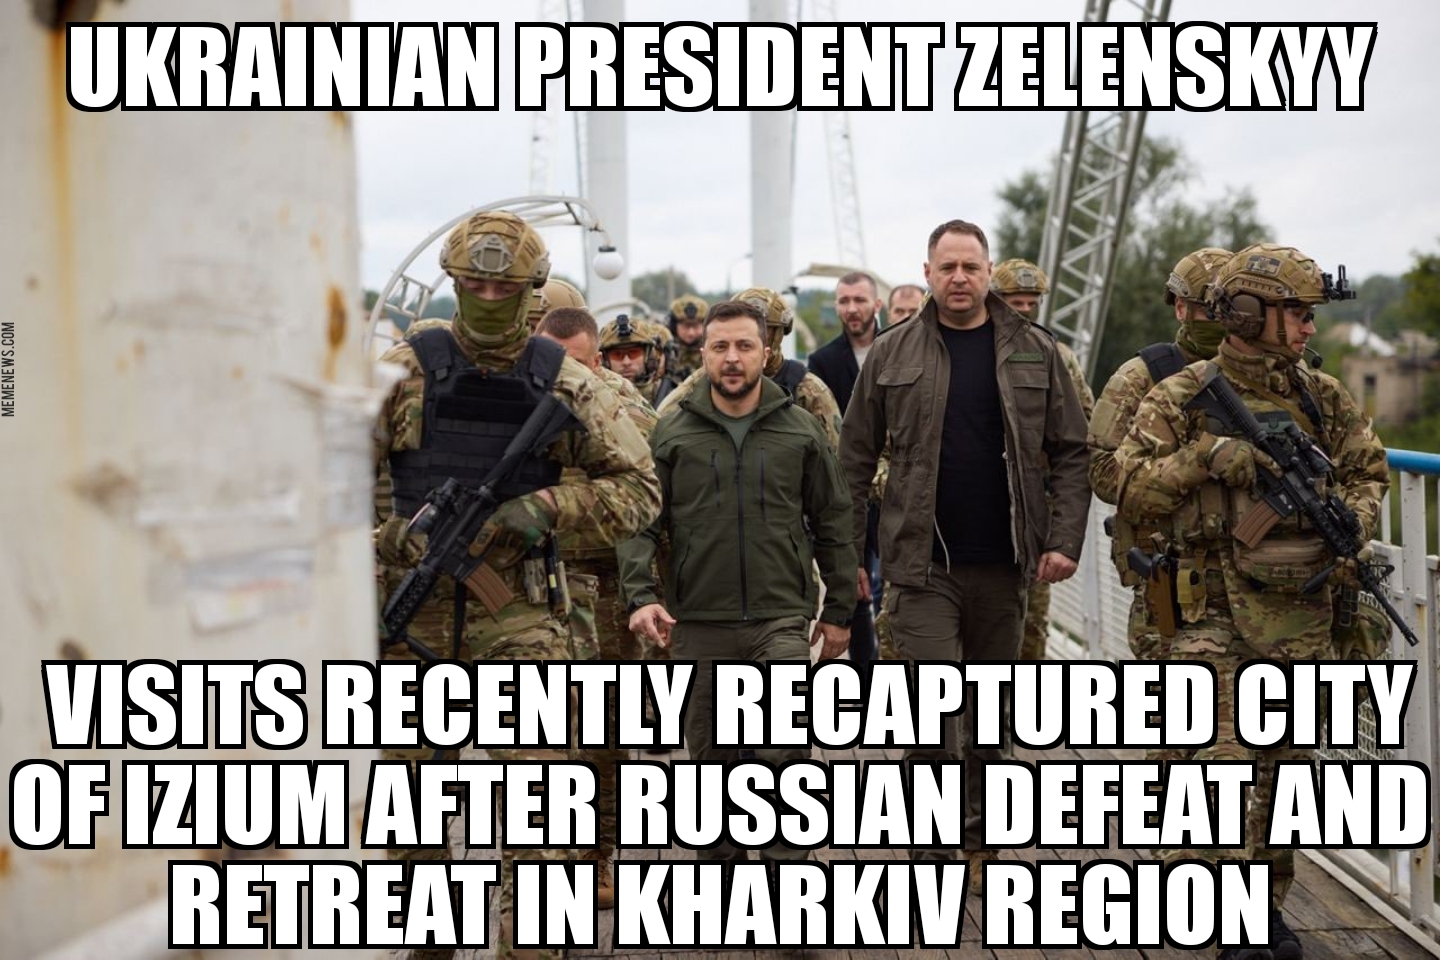 Russia retreats in Kharkiv